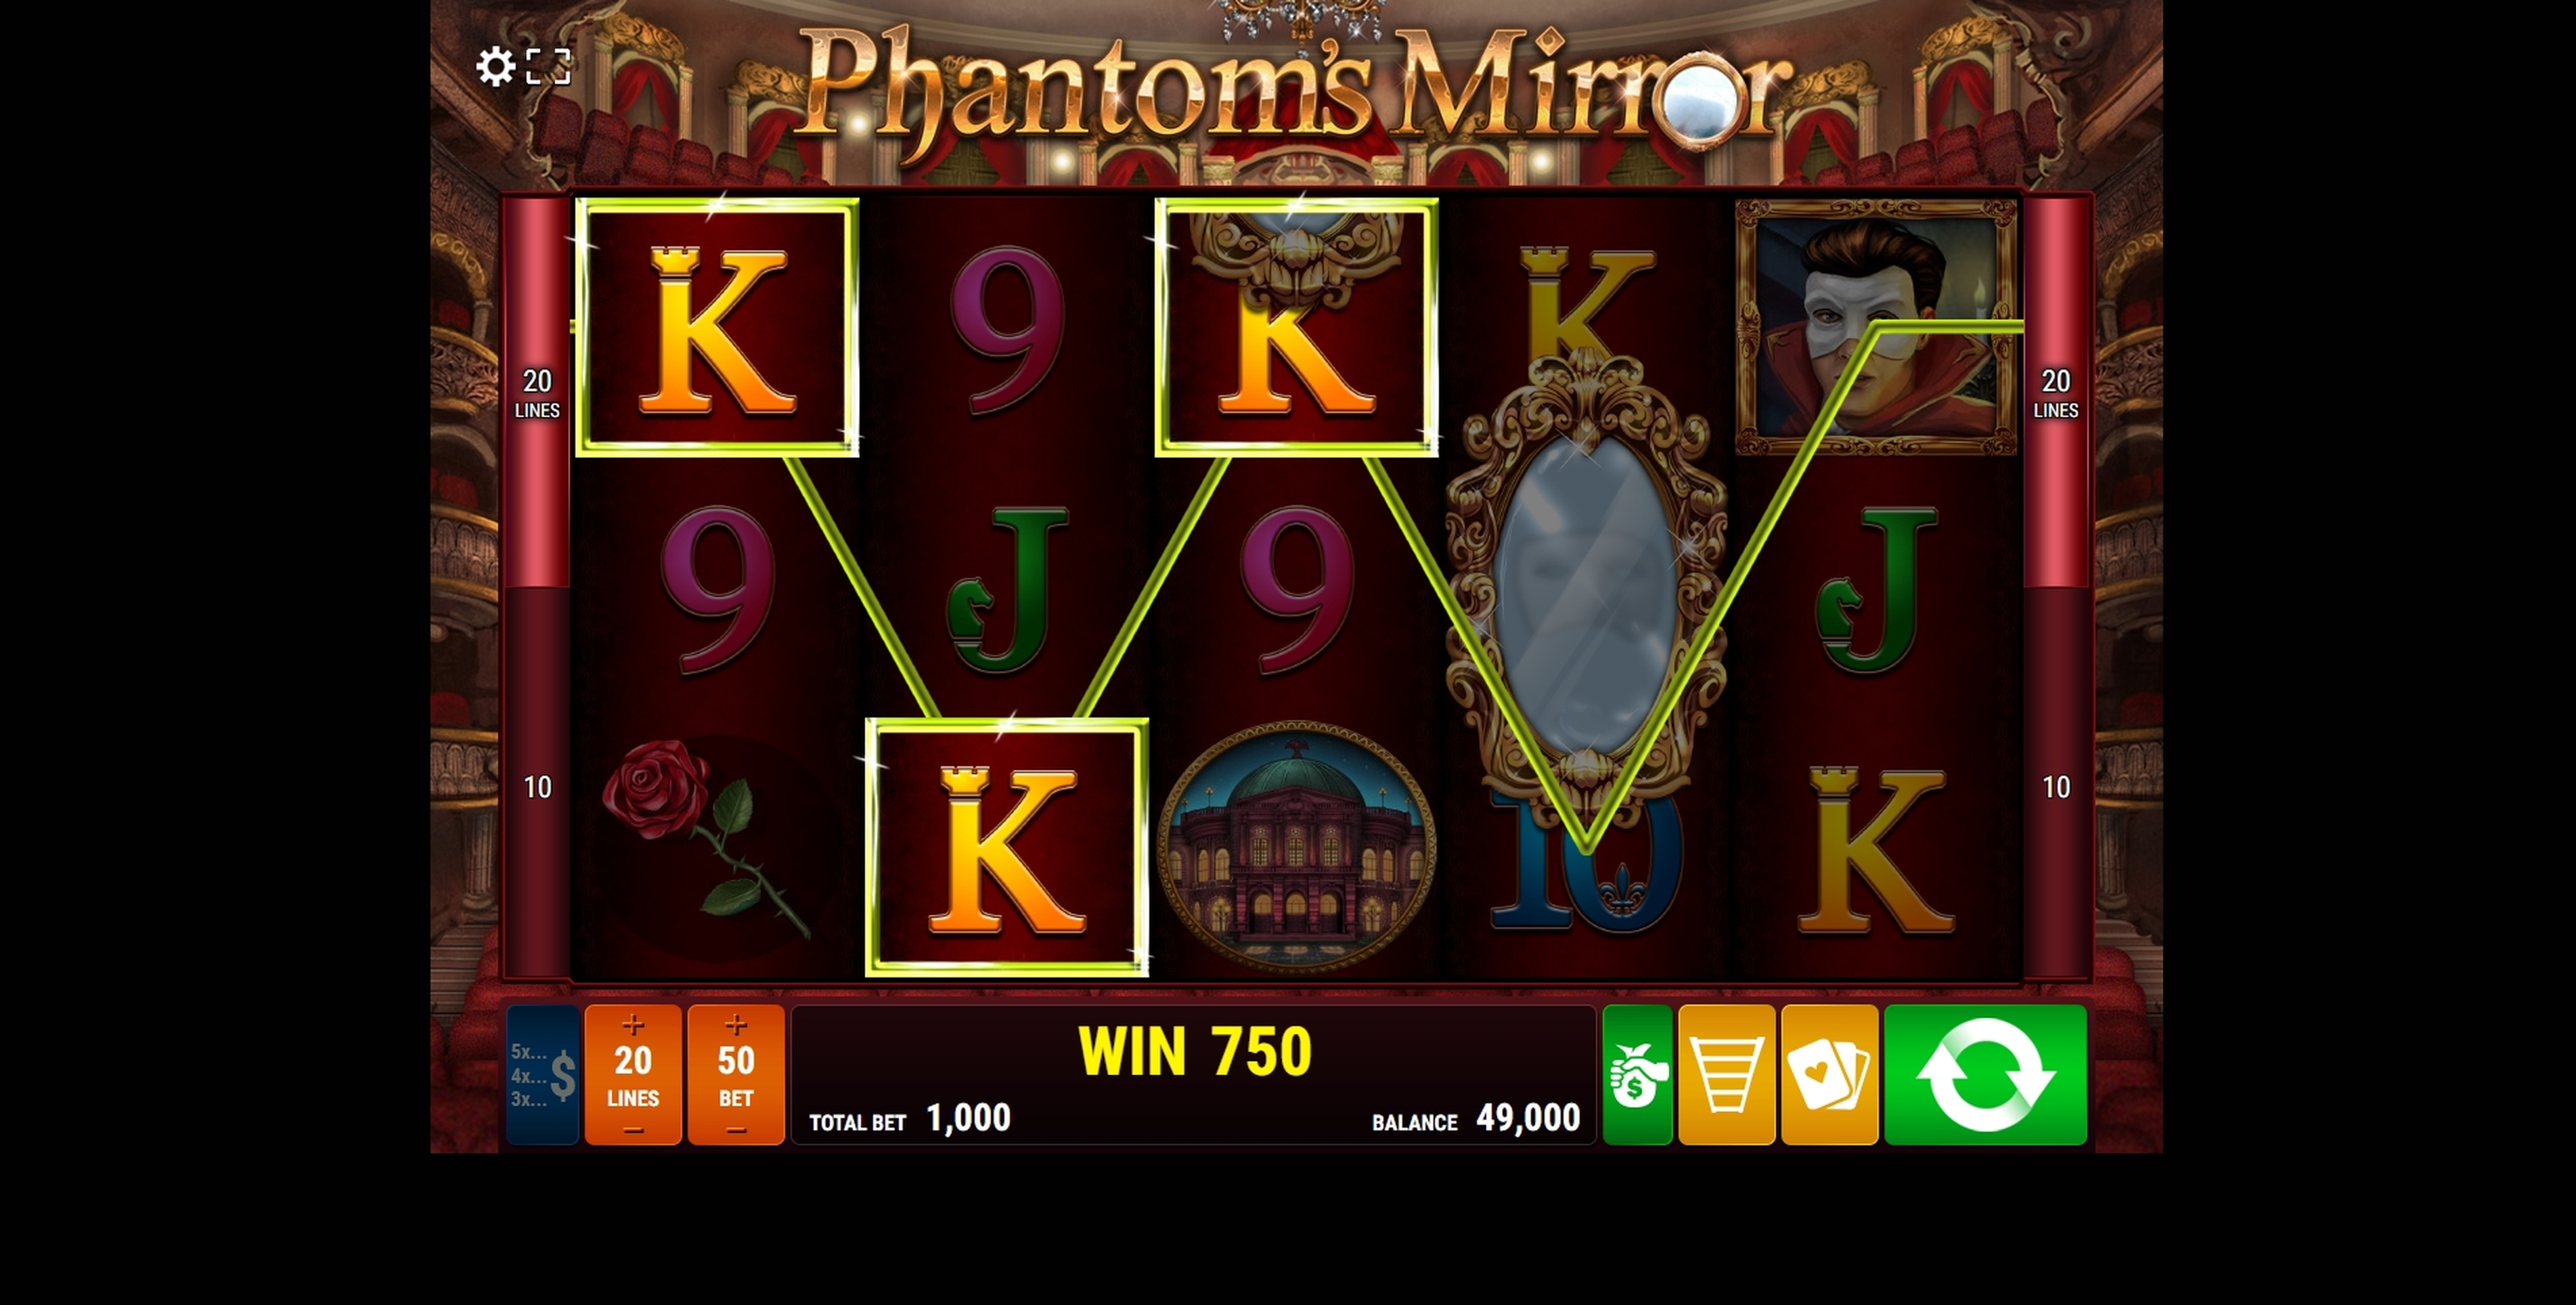 Win Money in Phantom's Mirror Free Slot Game by Bally Wulff